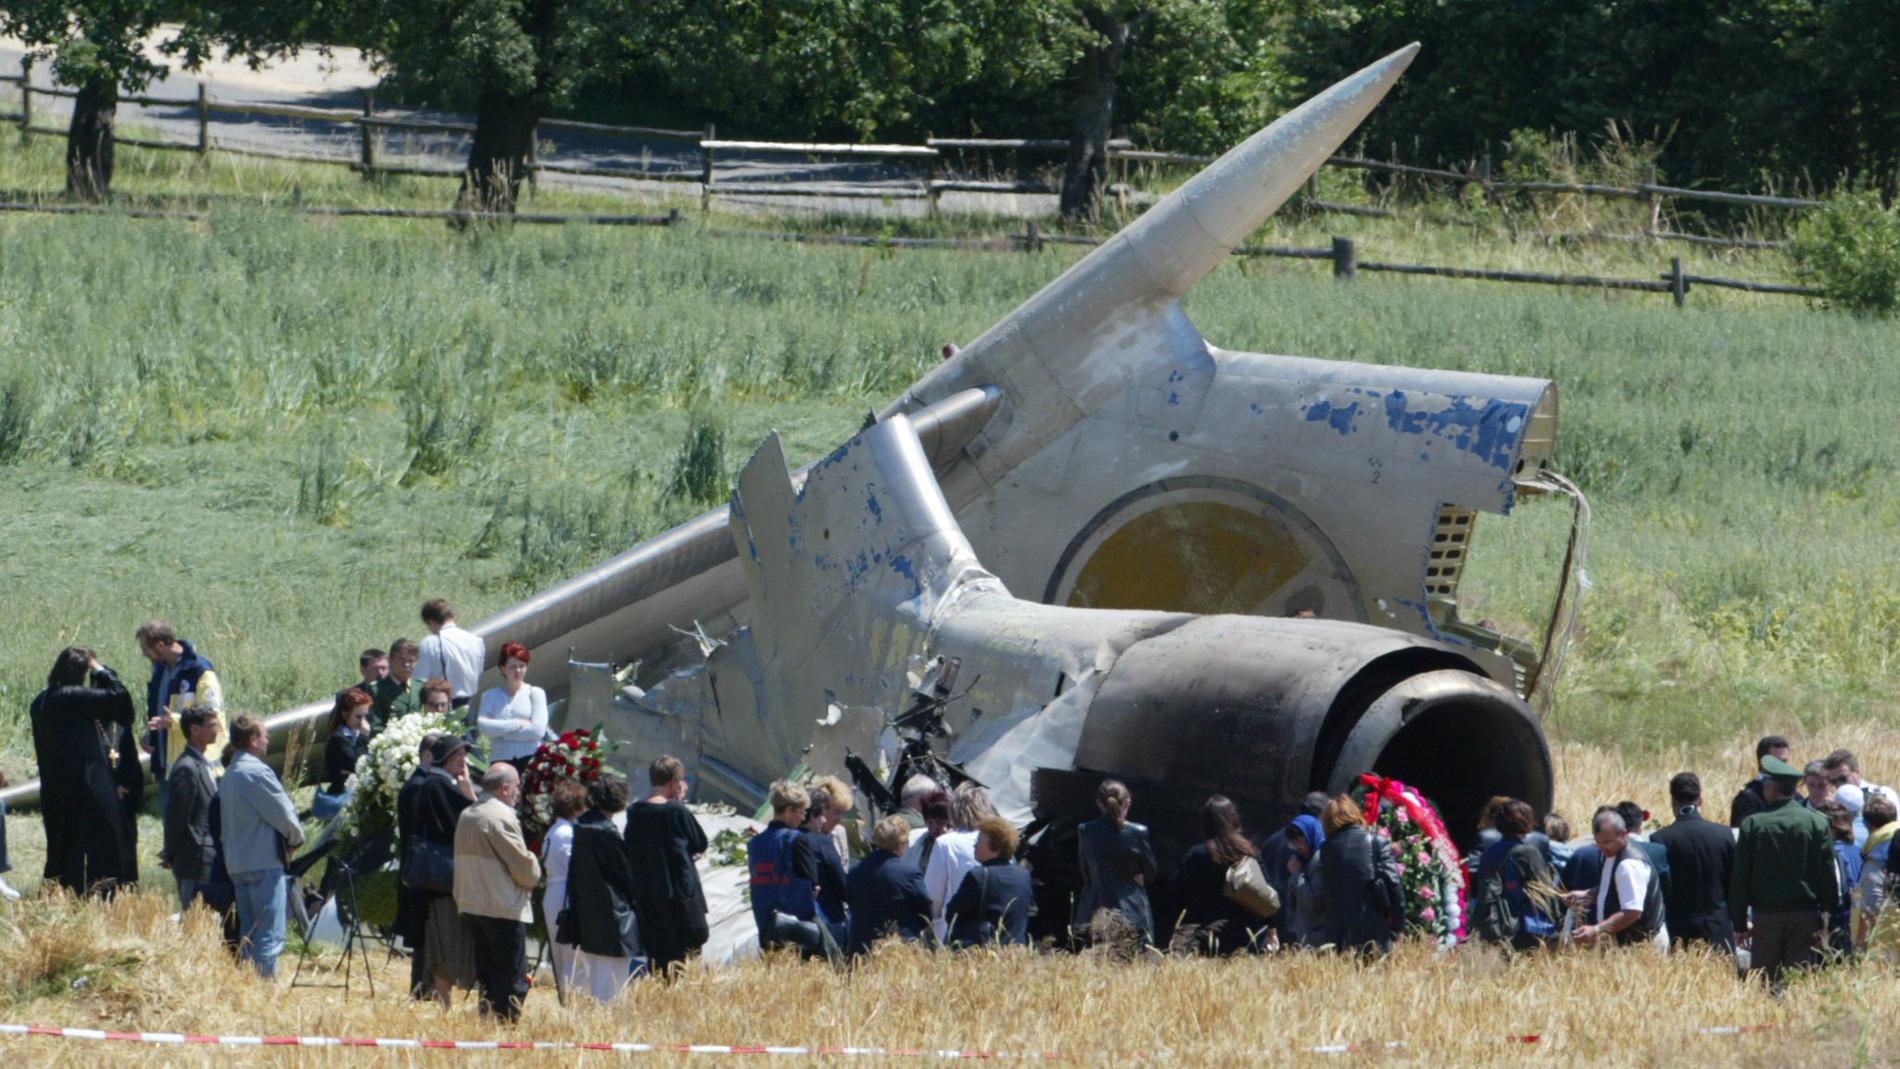 Башкирская авиакатастрофа